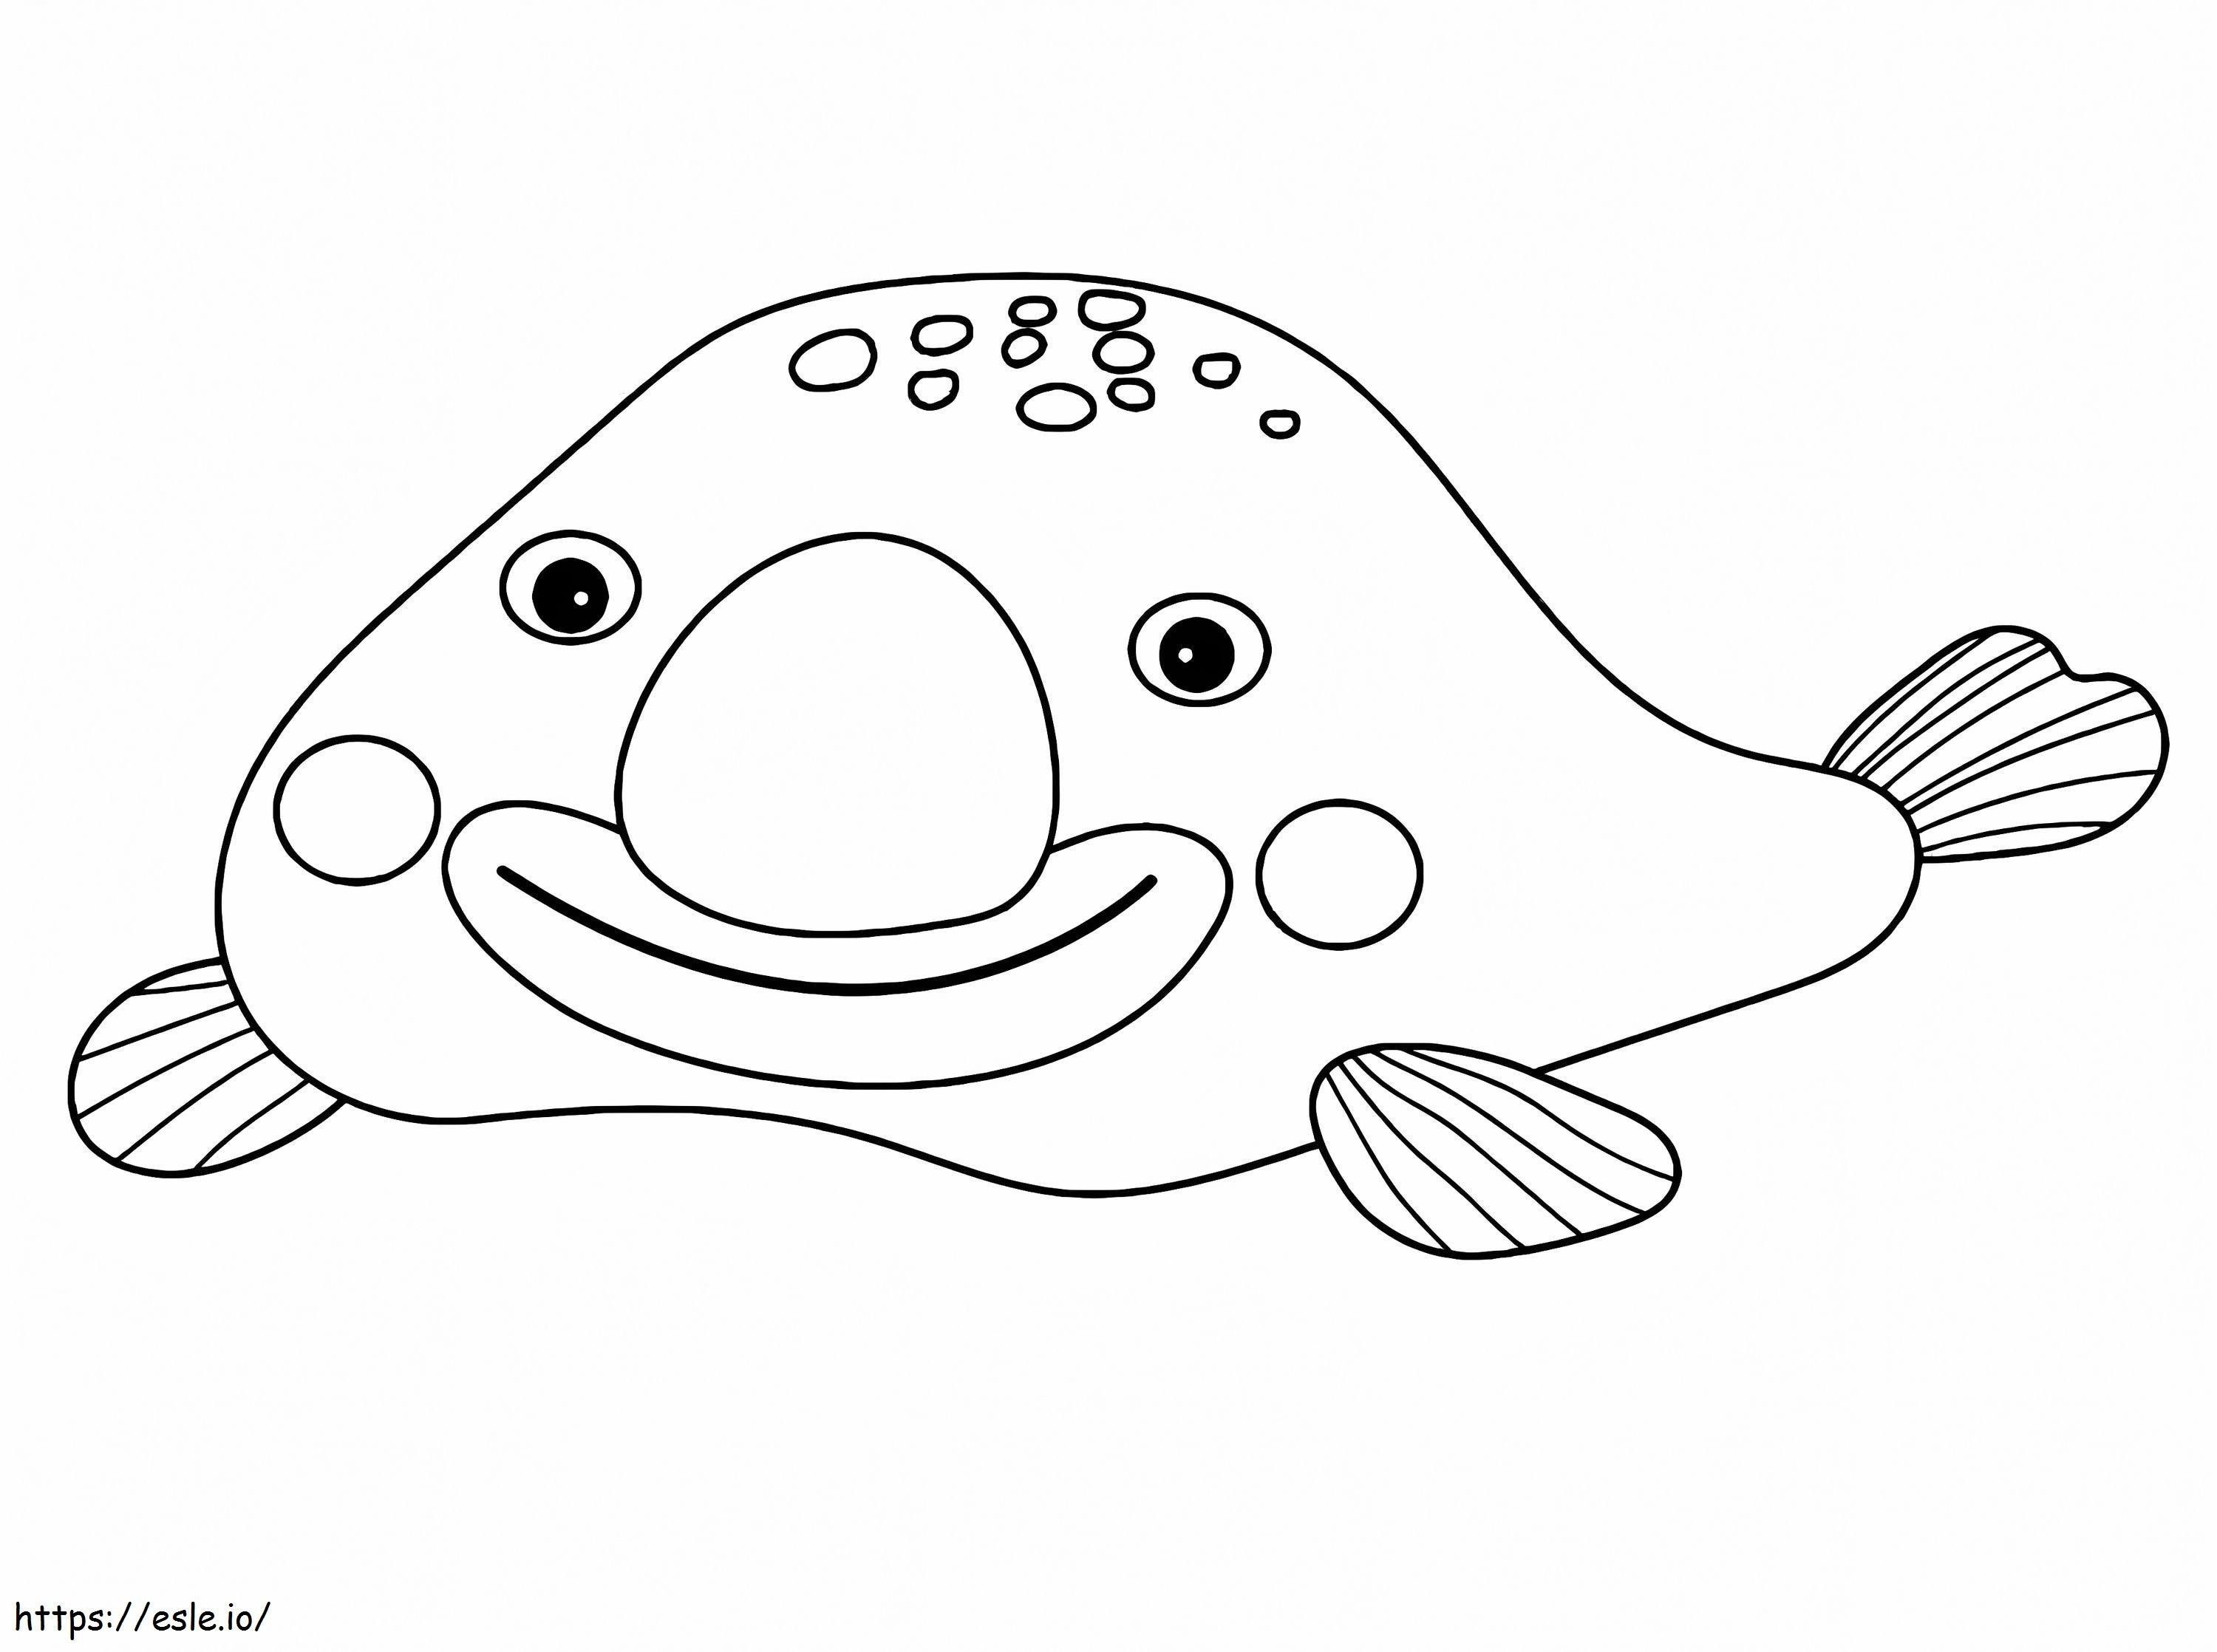 Blobfish fericit de colorat